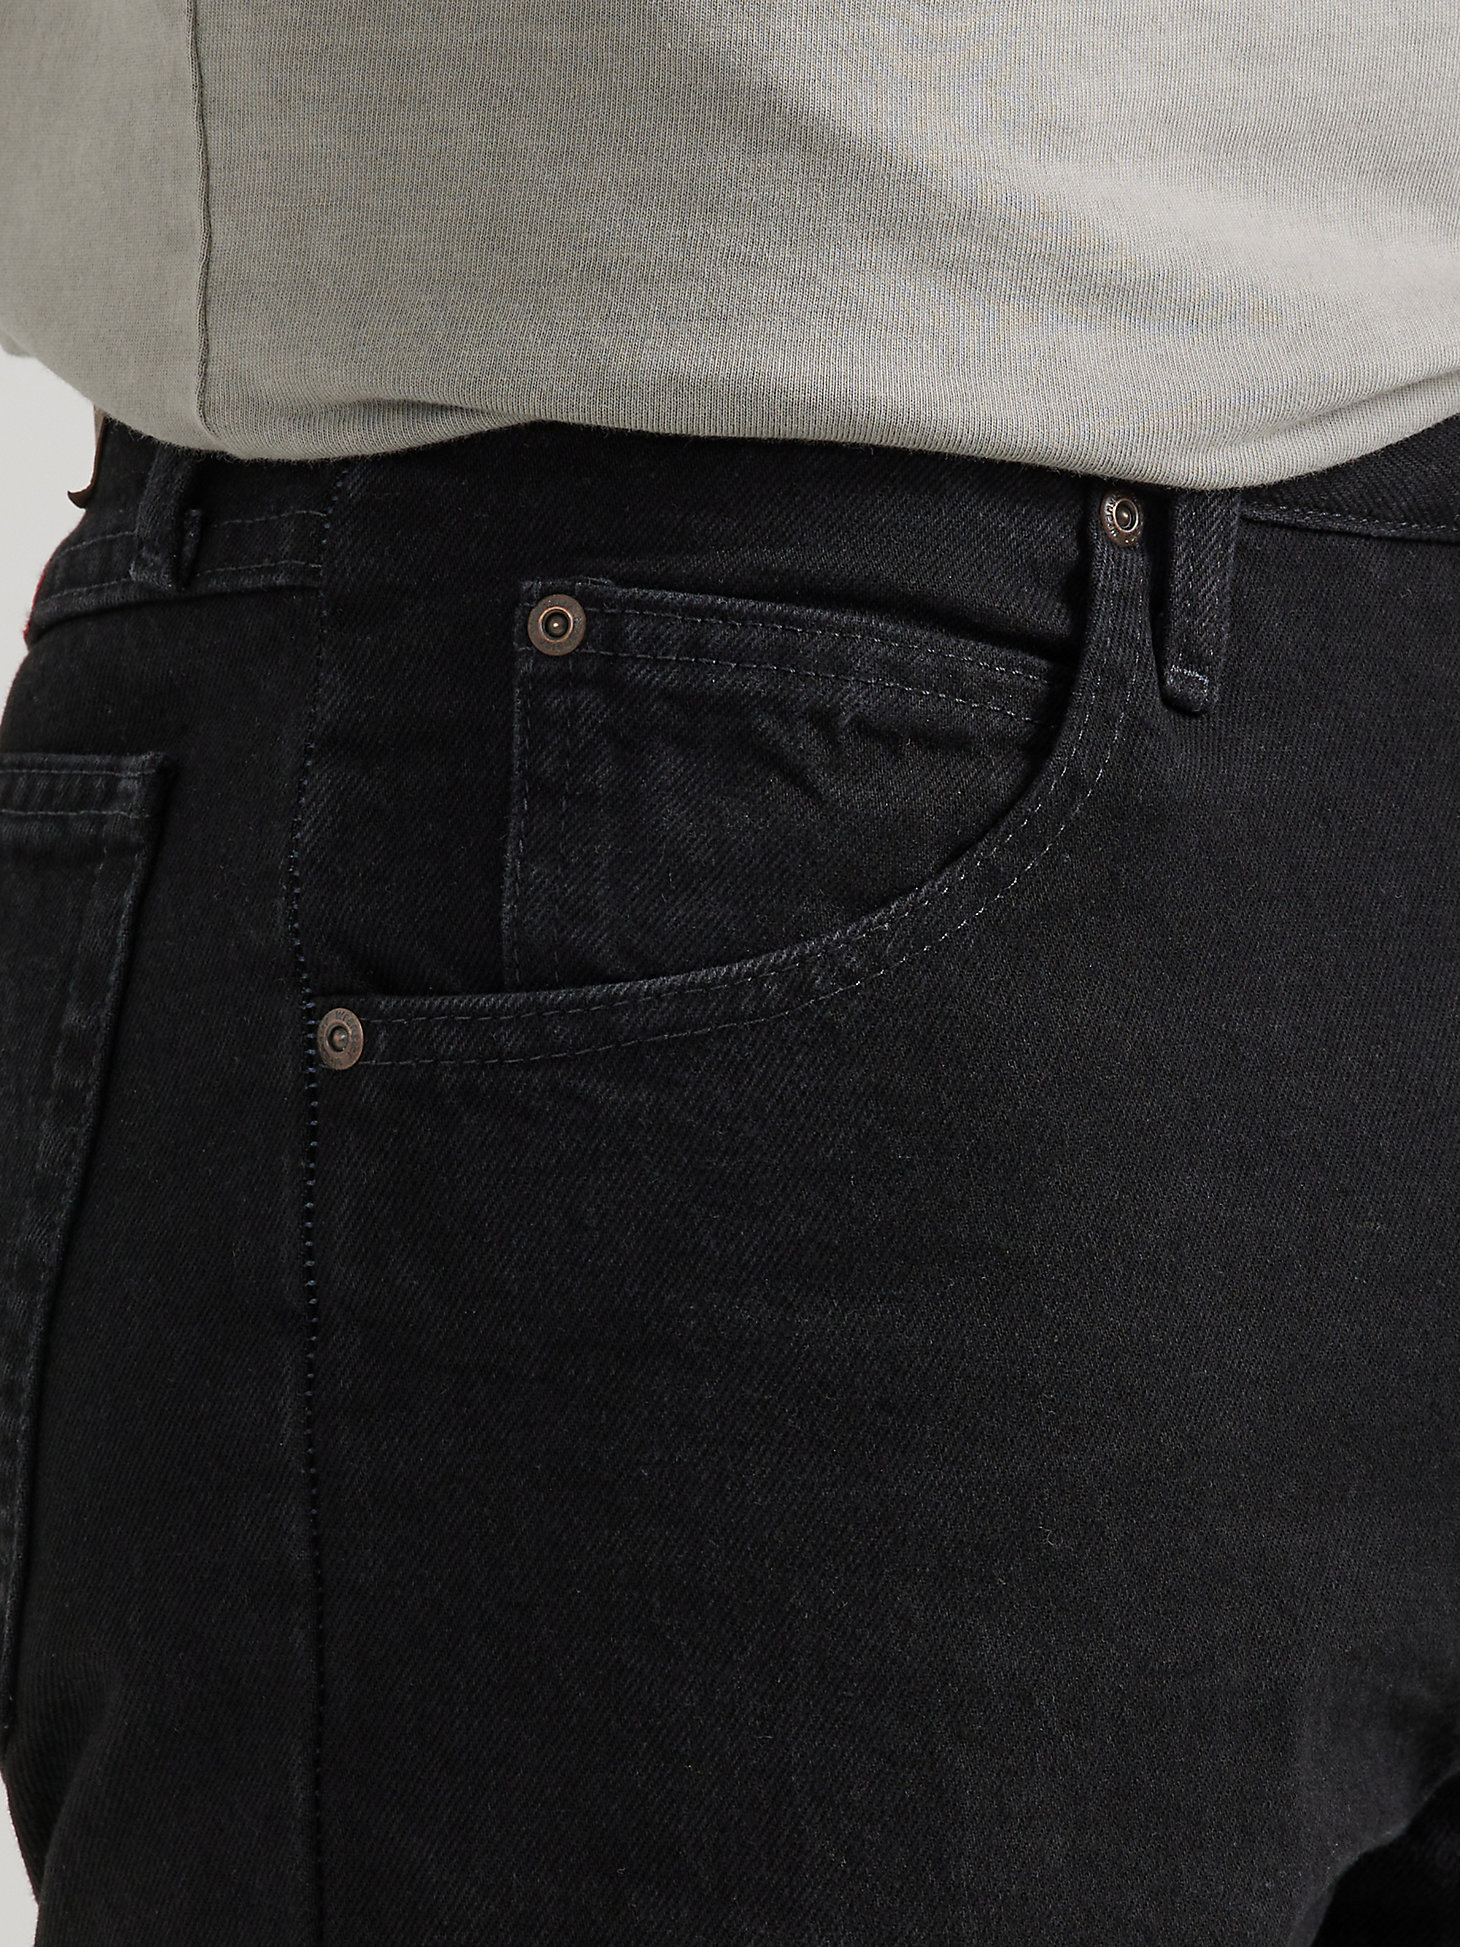 Wrangler® Five Star Premium Denim Regular Fit Jean in Coal Black alternative view 3